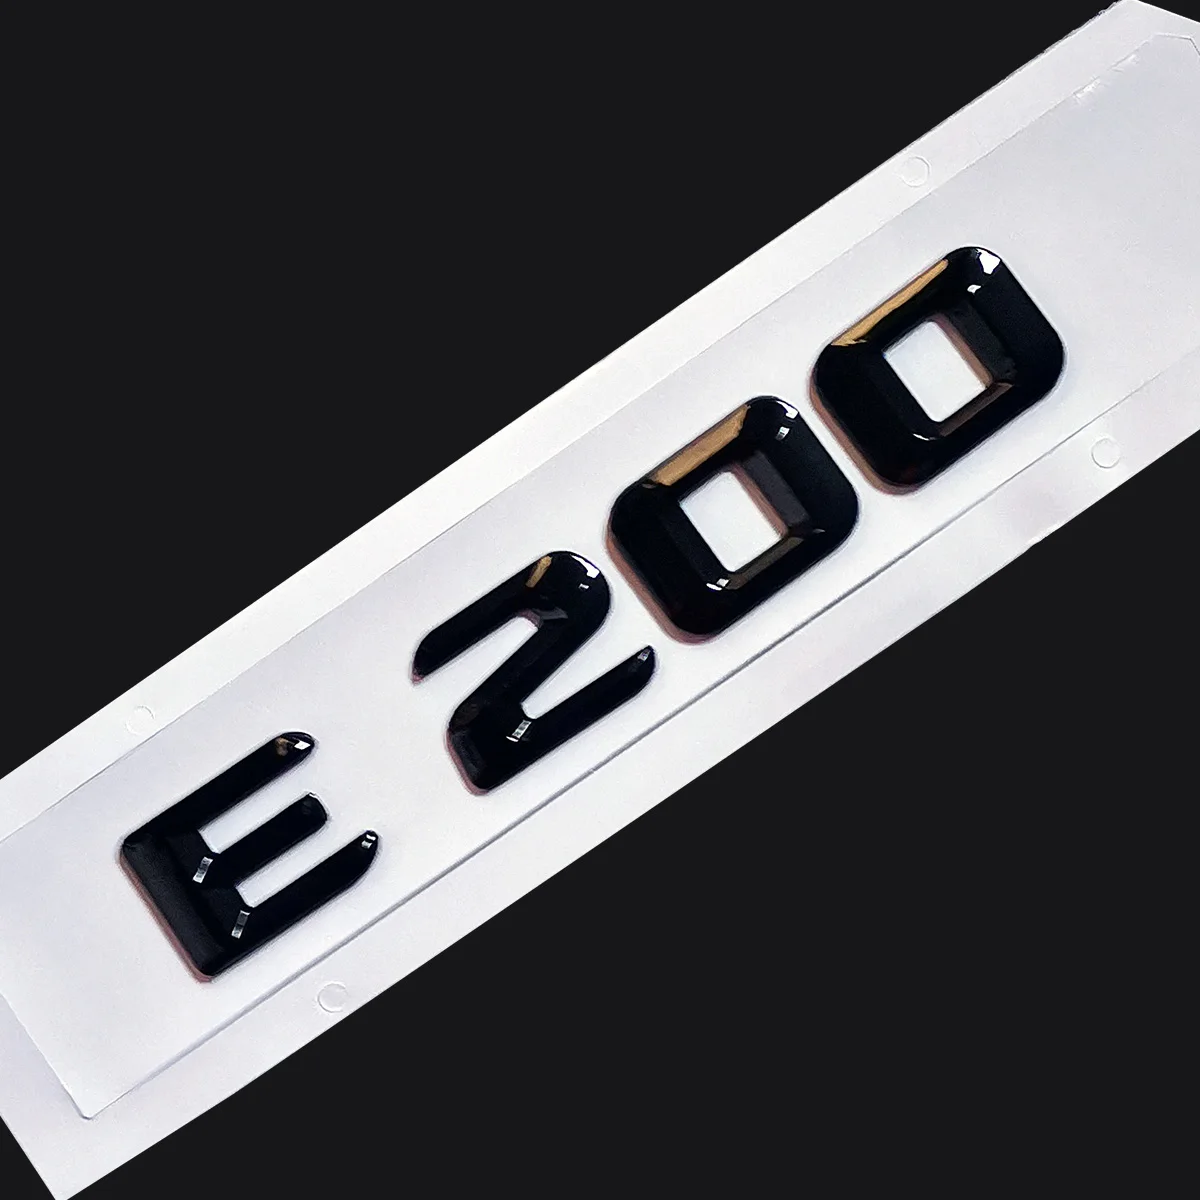 Original Size 1:1 Car rear tail Emblem Number letters Car Sticker For Mercedes Benz E200 E 200 Chrome Silver/ Matte Black